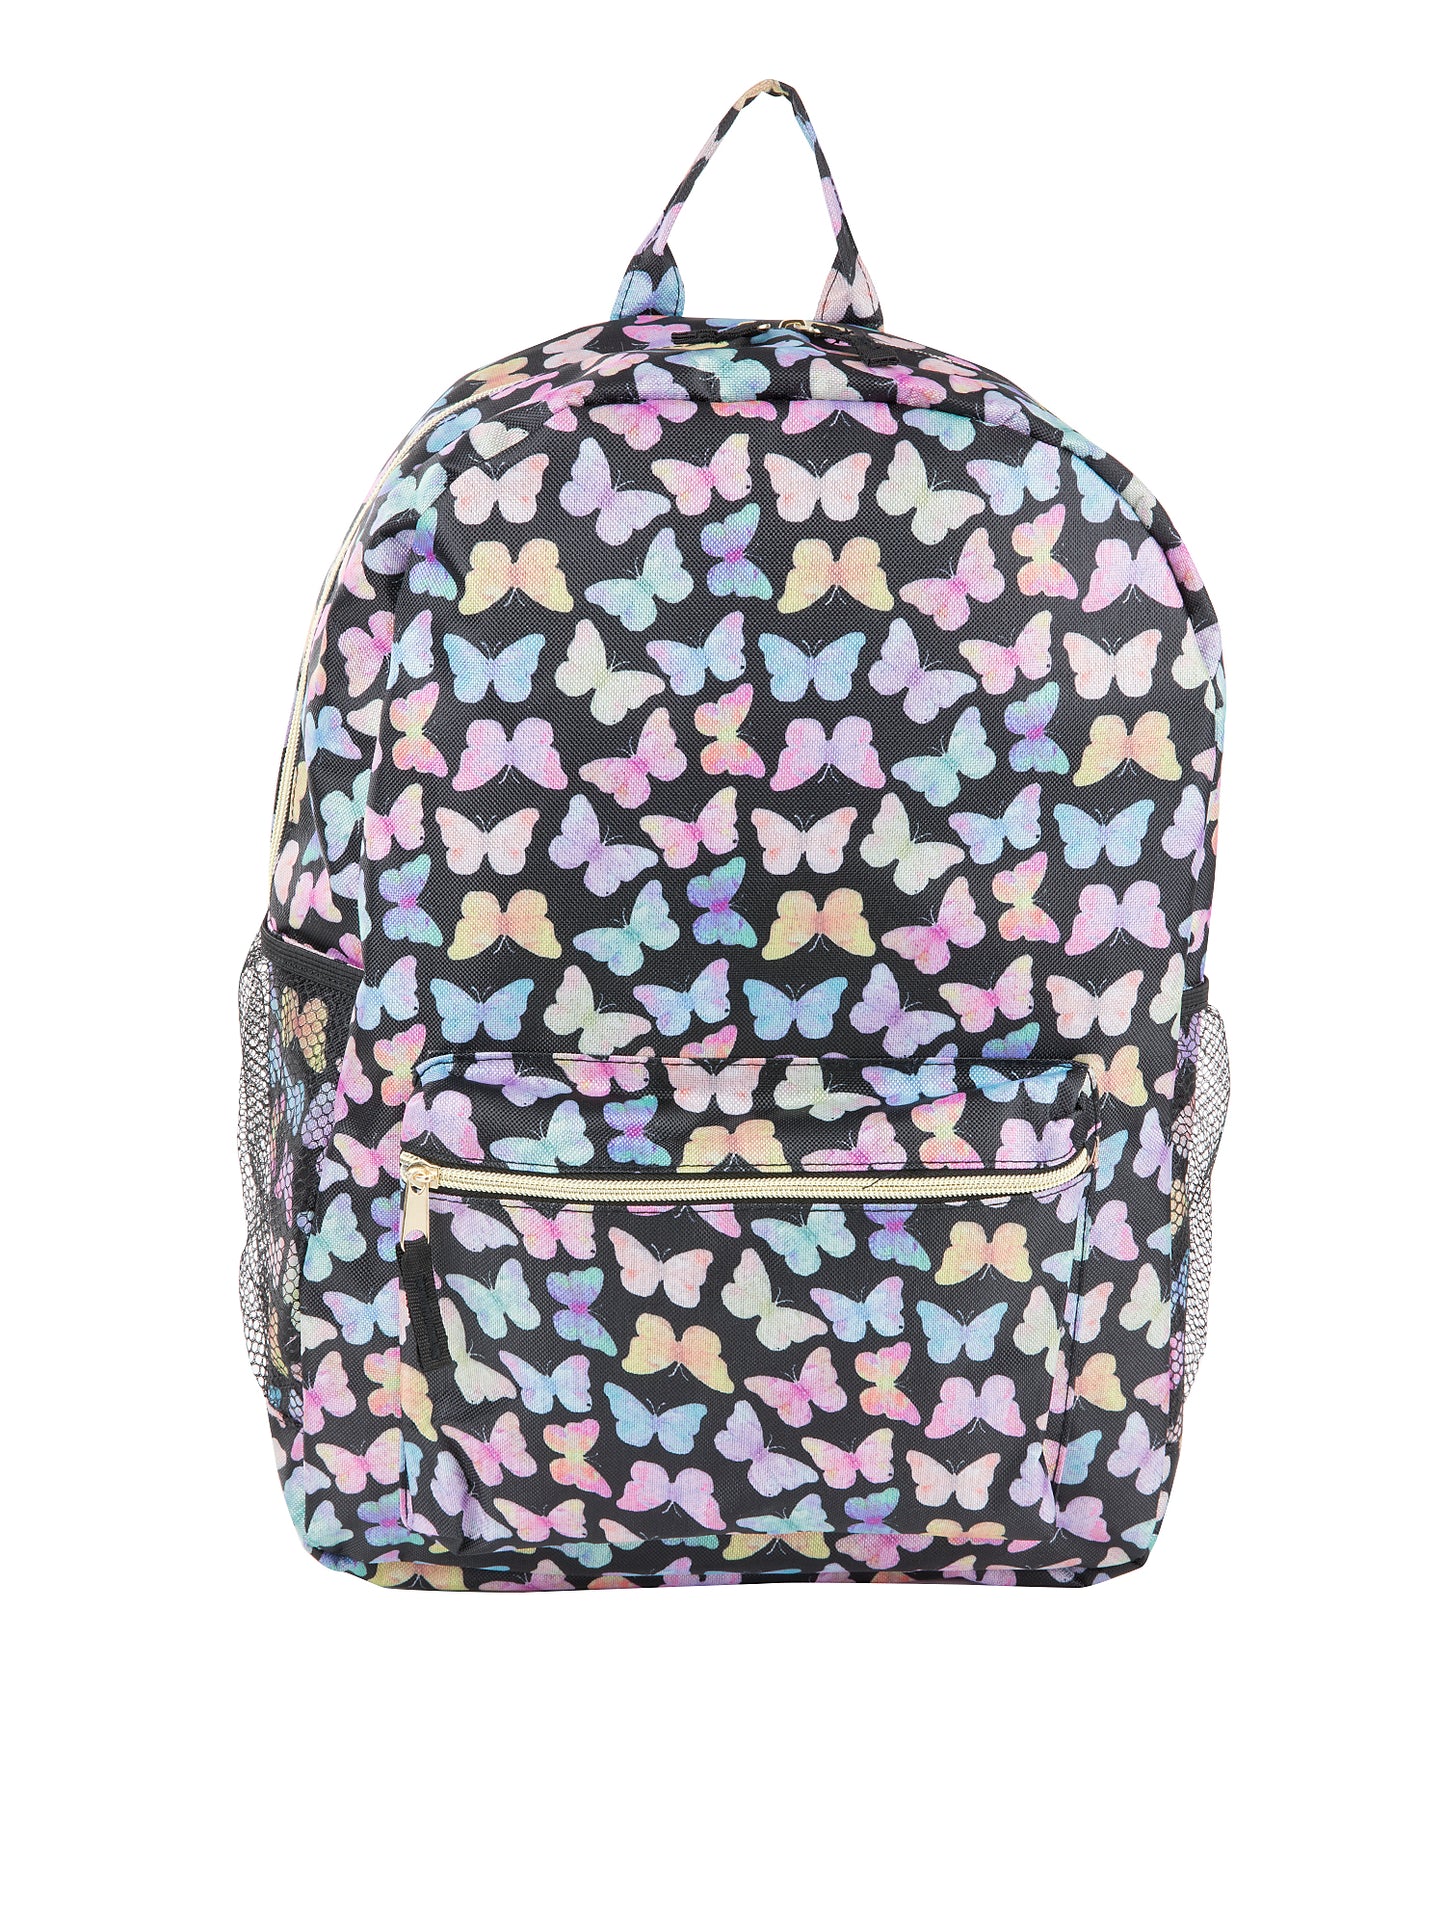 underonesky backpack butterfly